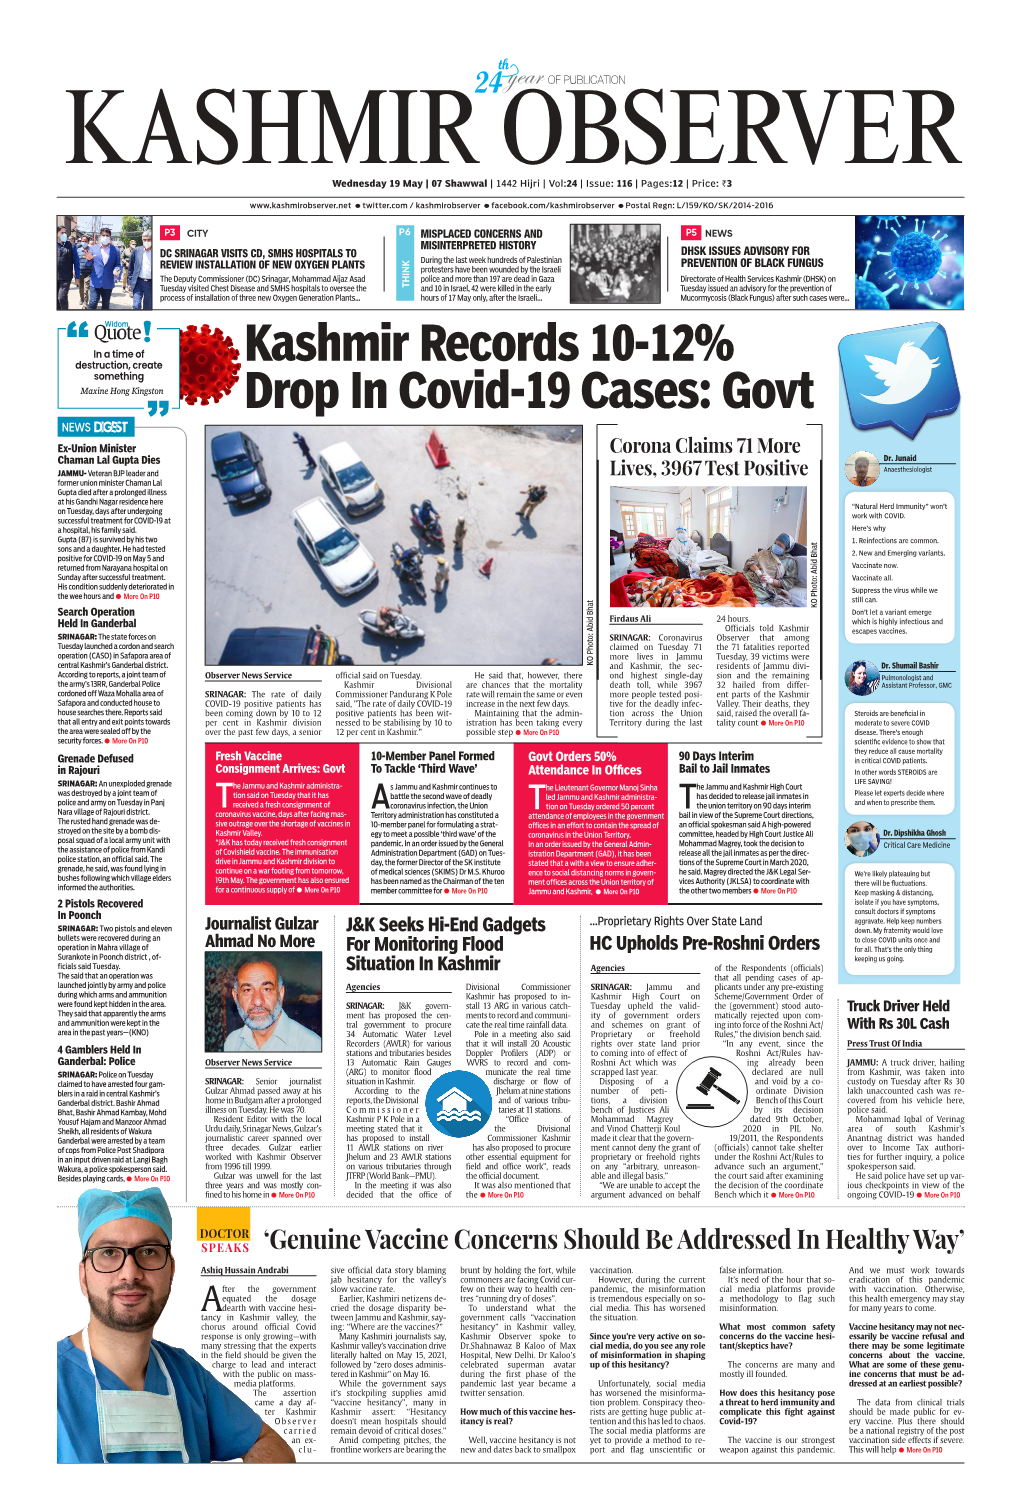 Kashmir Records 10-12% Drop in Covid-19 Cases: Govt